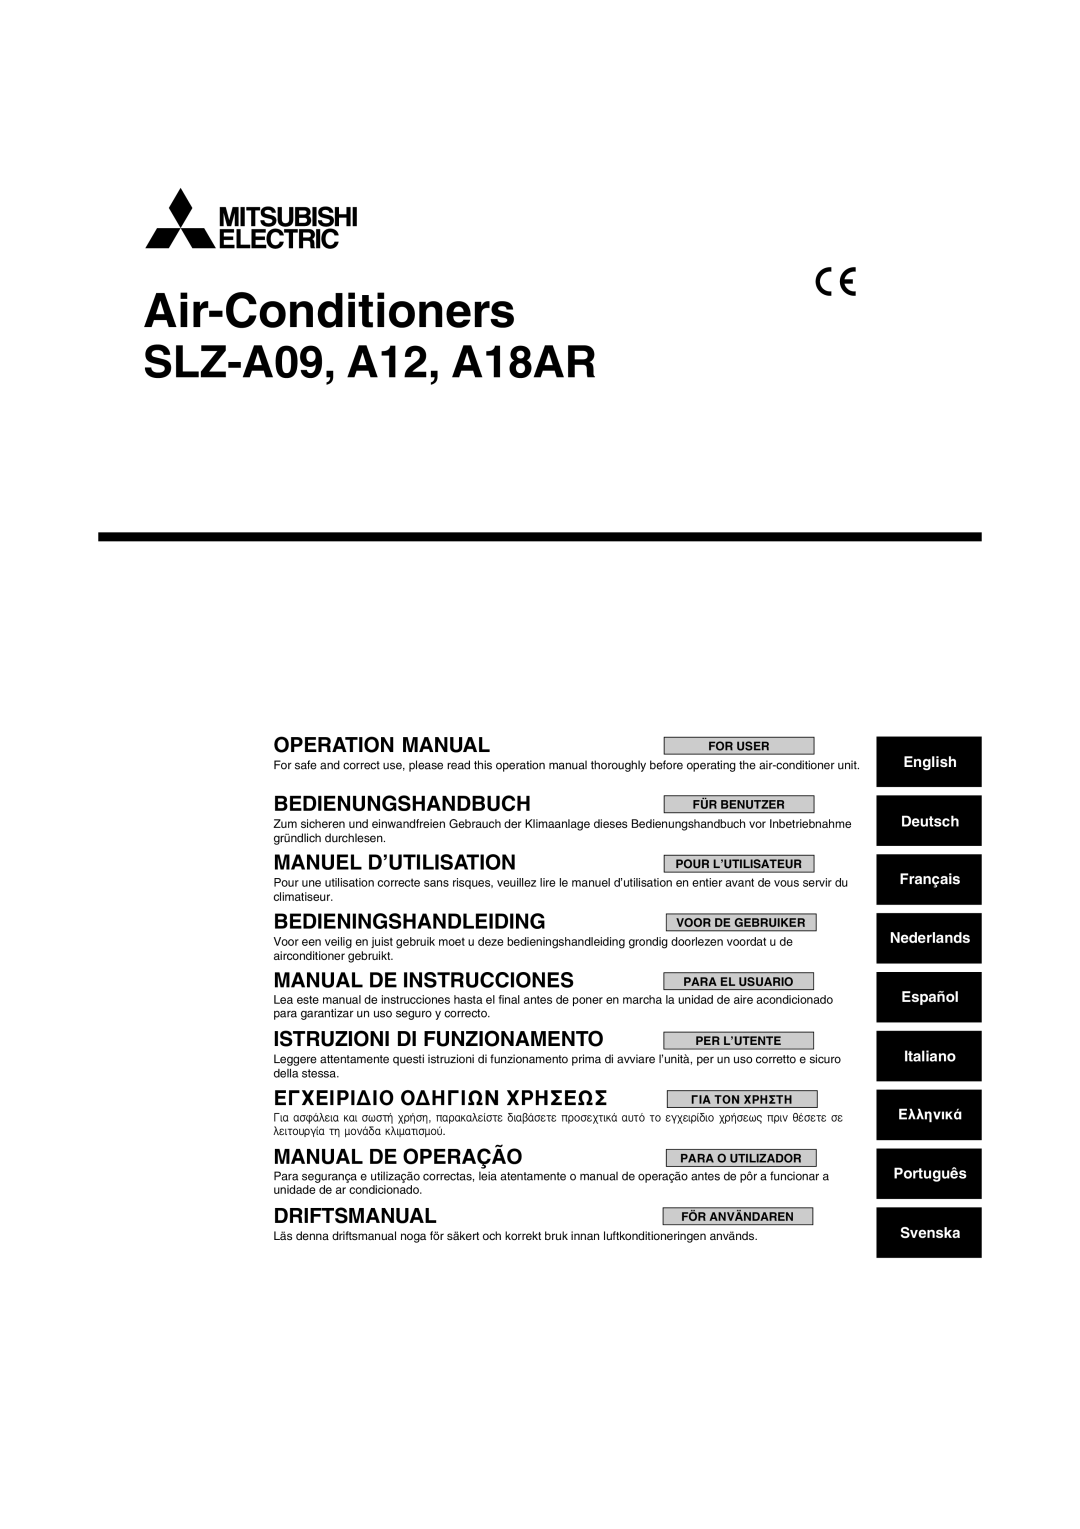 Mitsubishi Electronics operation manual Air-Conditioners, SLZ-A09, A12, A18AR, Bedienungshandbuch, Manuel D’Utilisation 